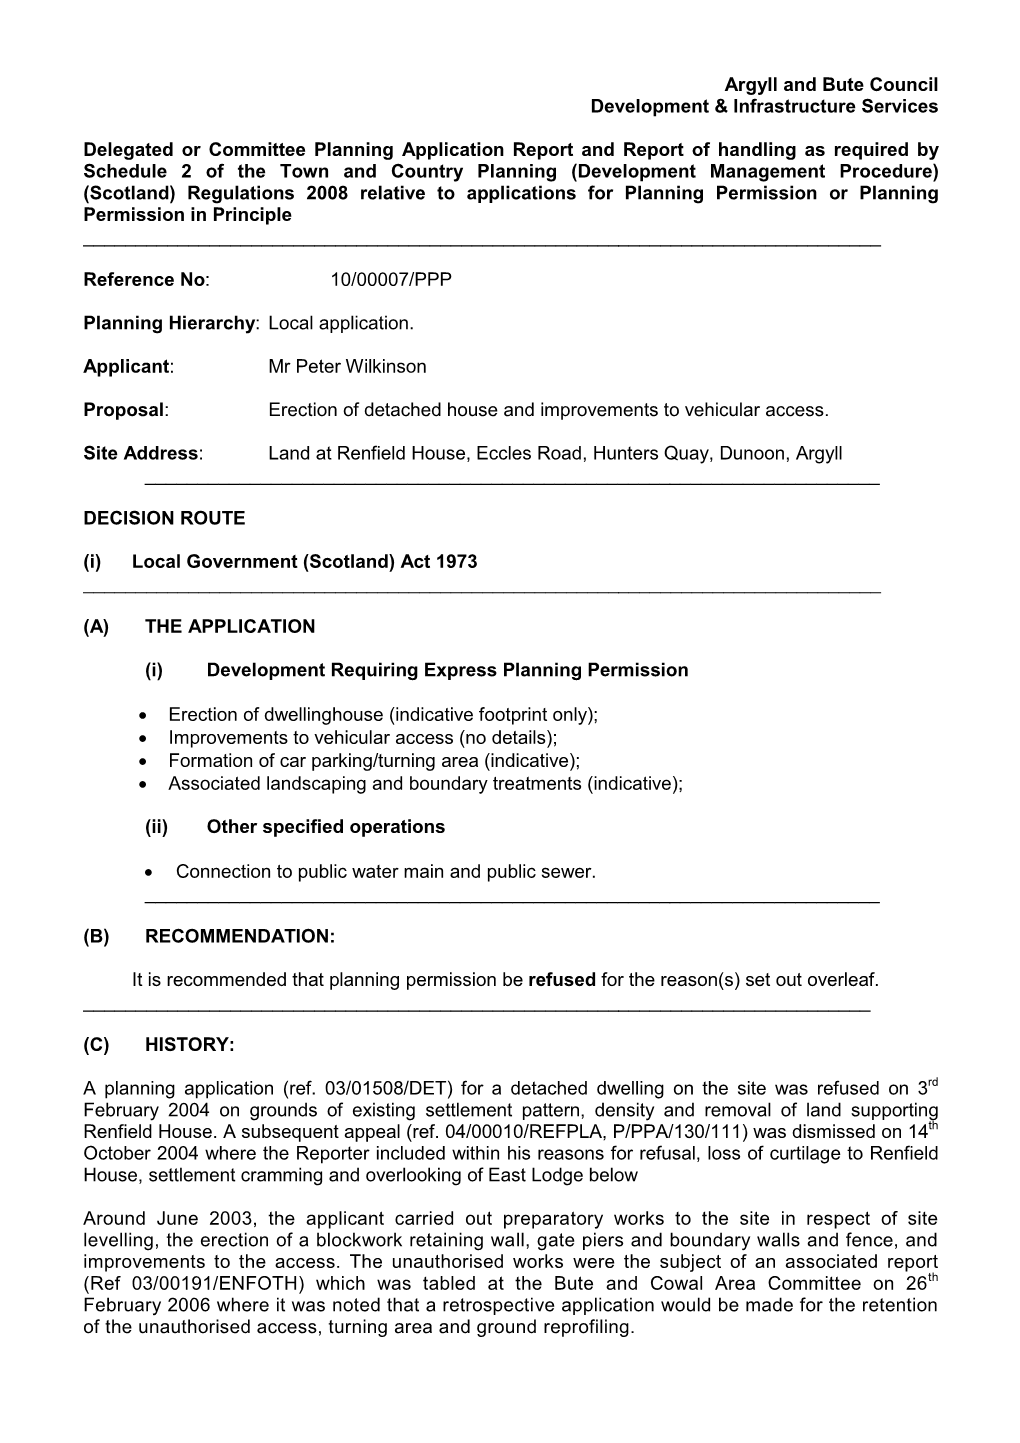 00007 Committee Report of Handling Wilkinson Dwellinghouse Renfield Brae Hunters Quay, Item 10. PDF 133 KB